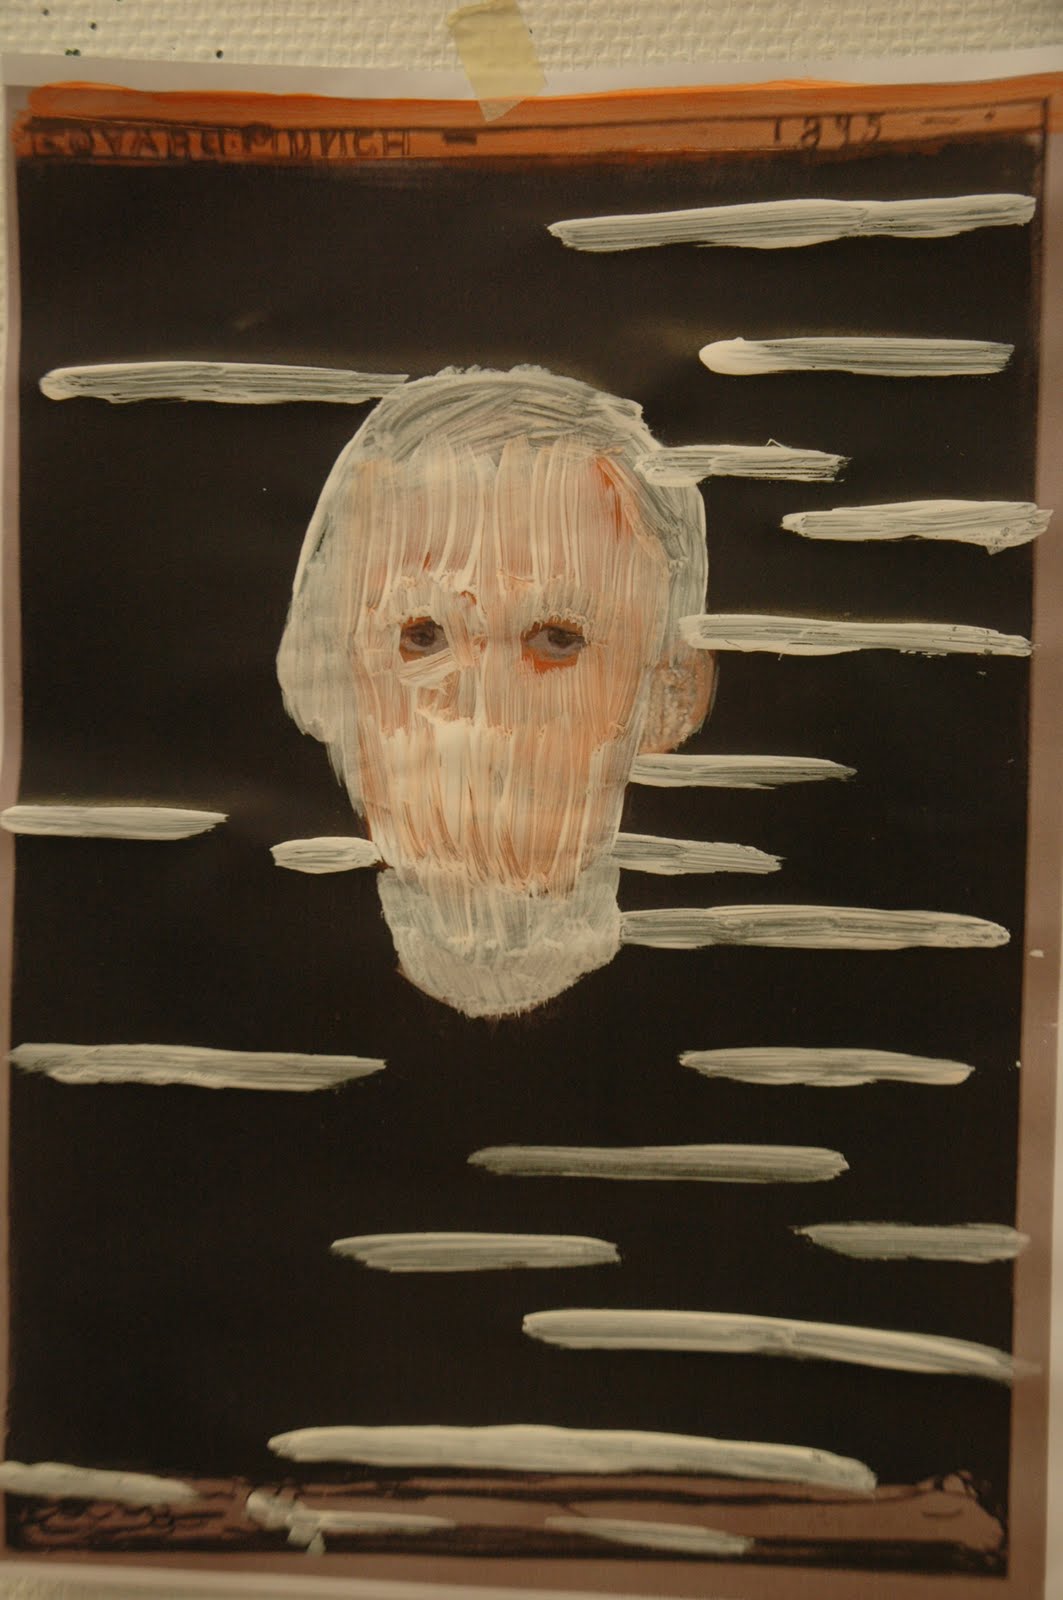 10-11 Munck-Warhol-projekt